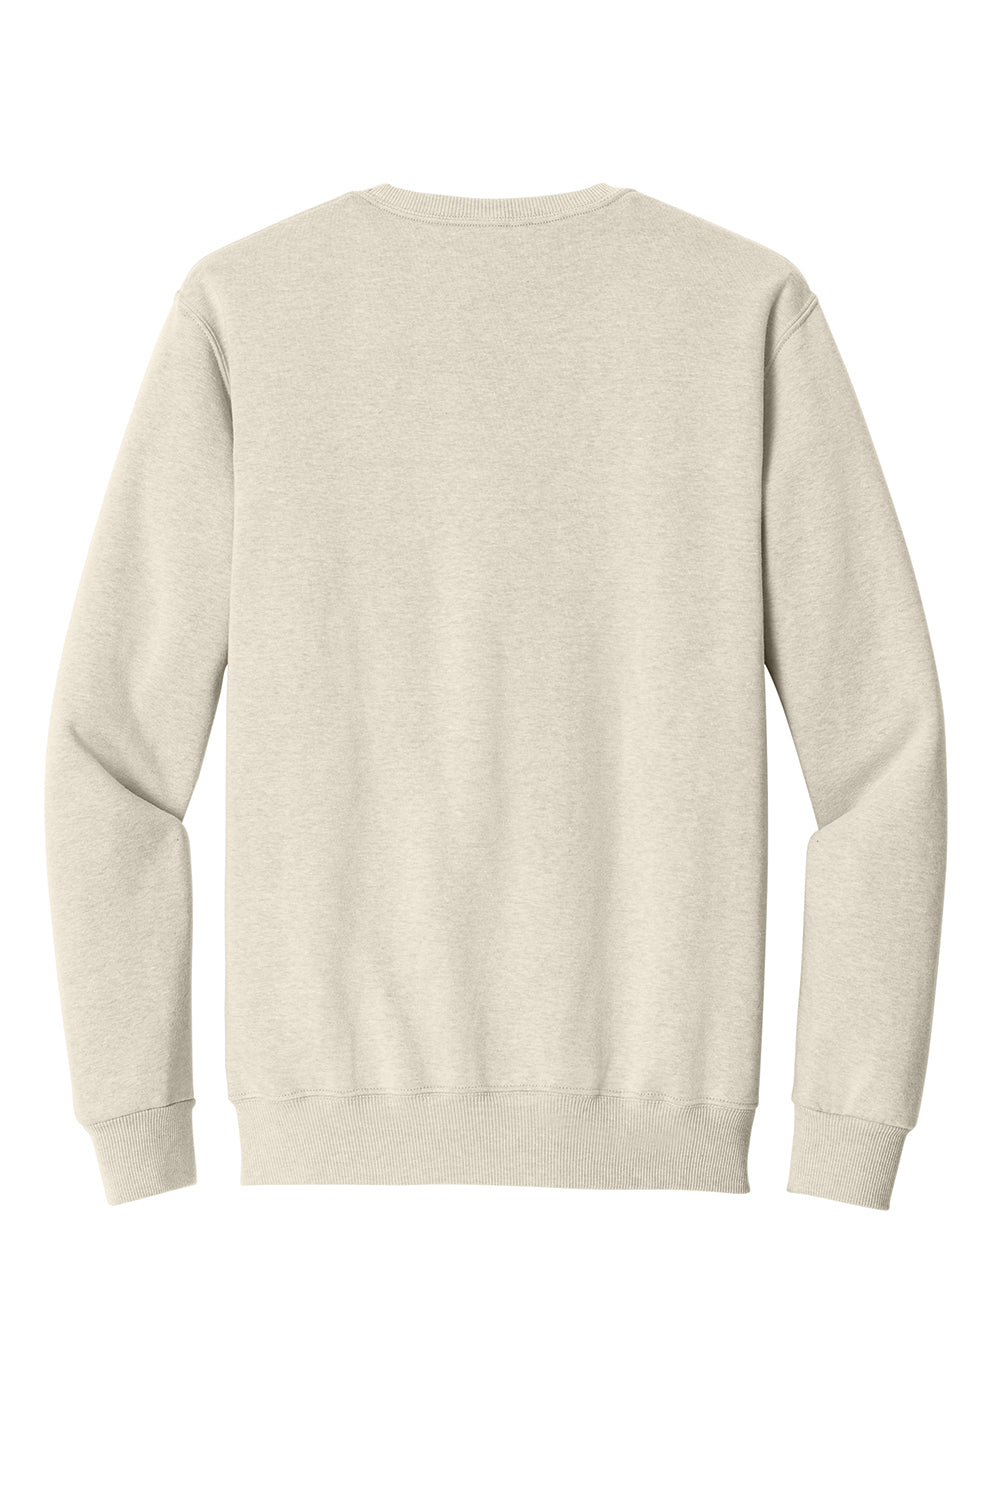 Jerzees 701M Mens Eco Premium Crewneck Sweatshirt Heather Sweet Cream Flat Back